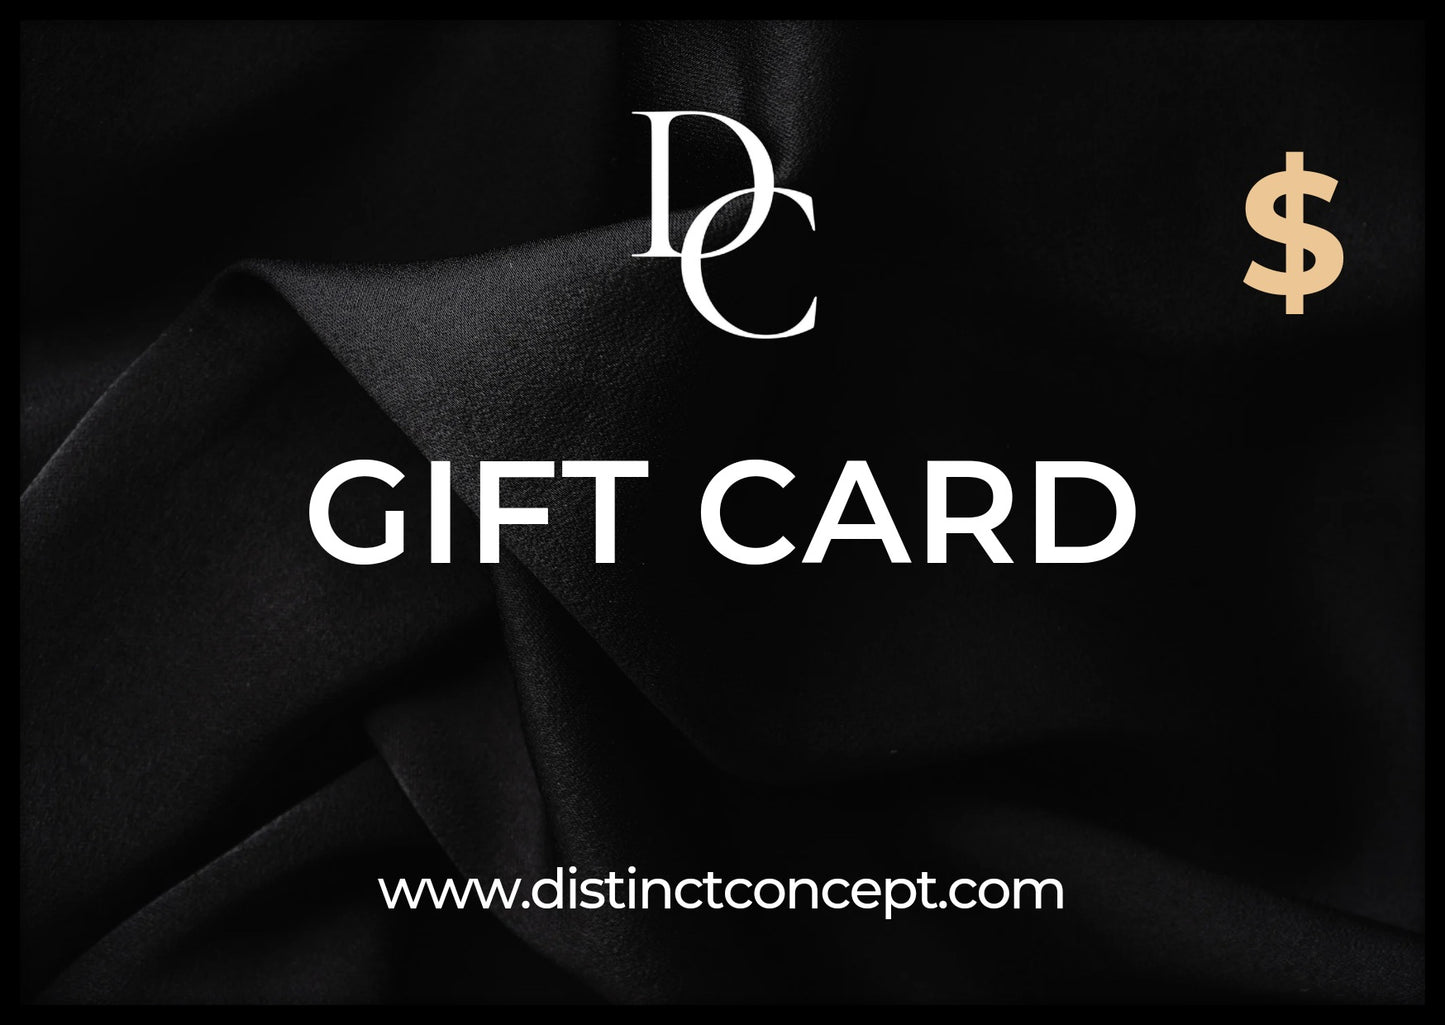 Distinct Concept gift card